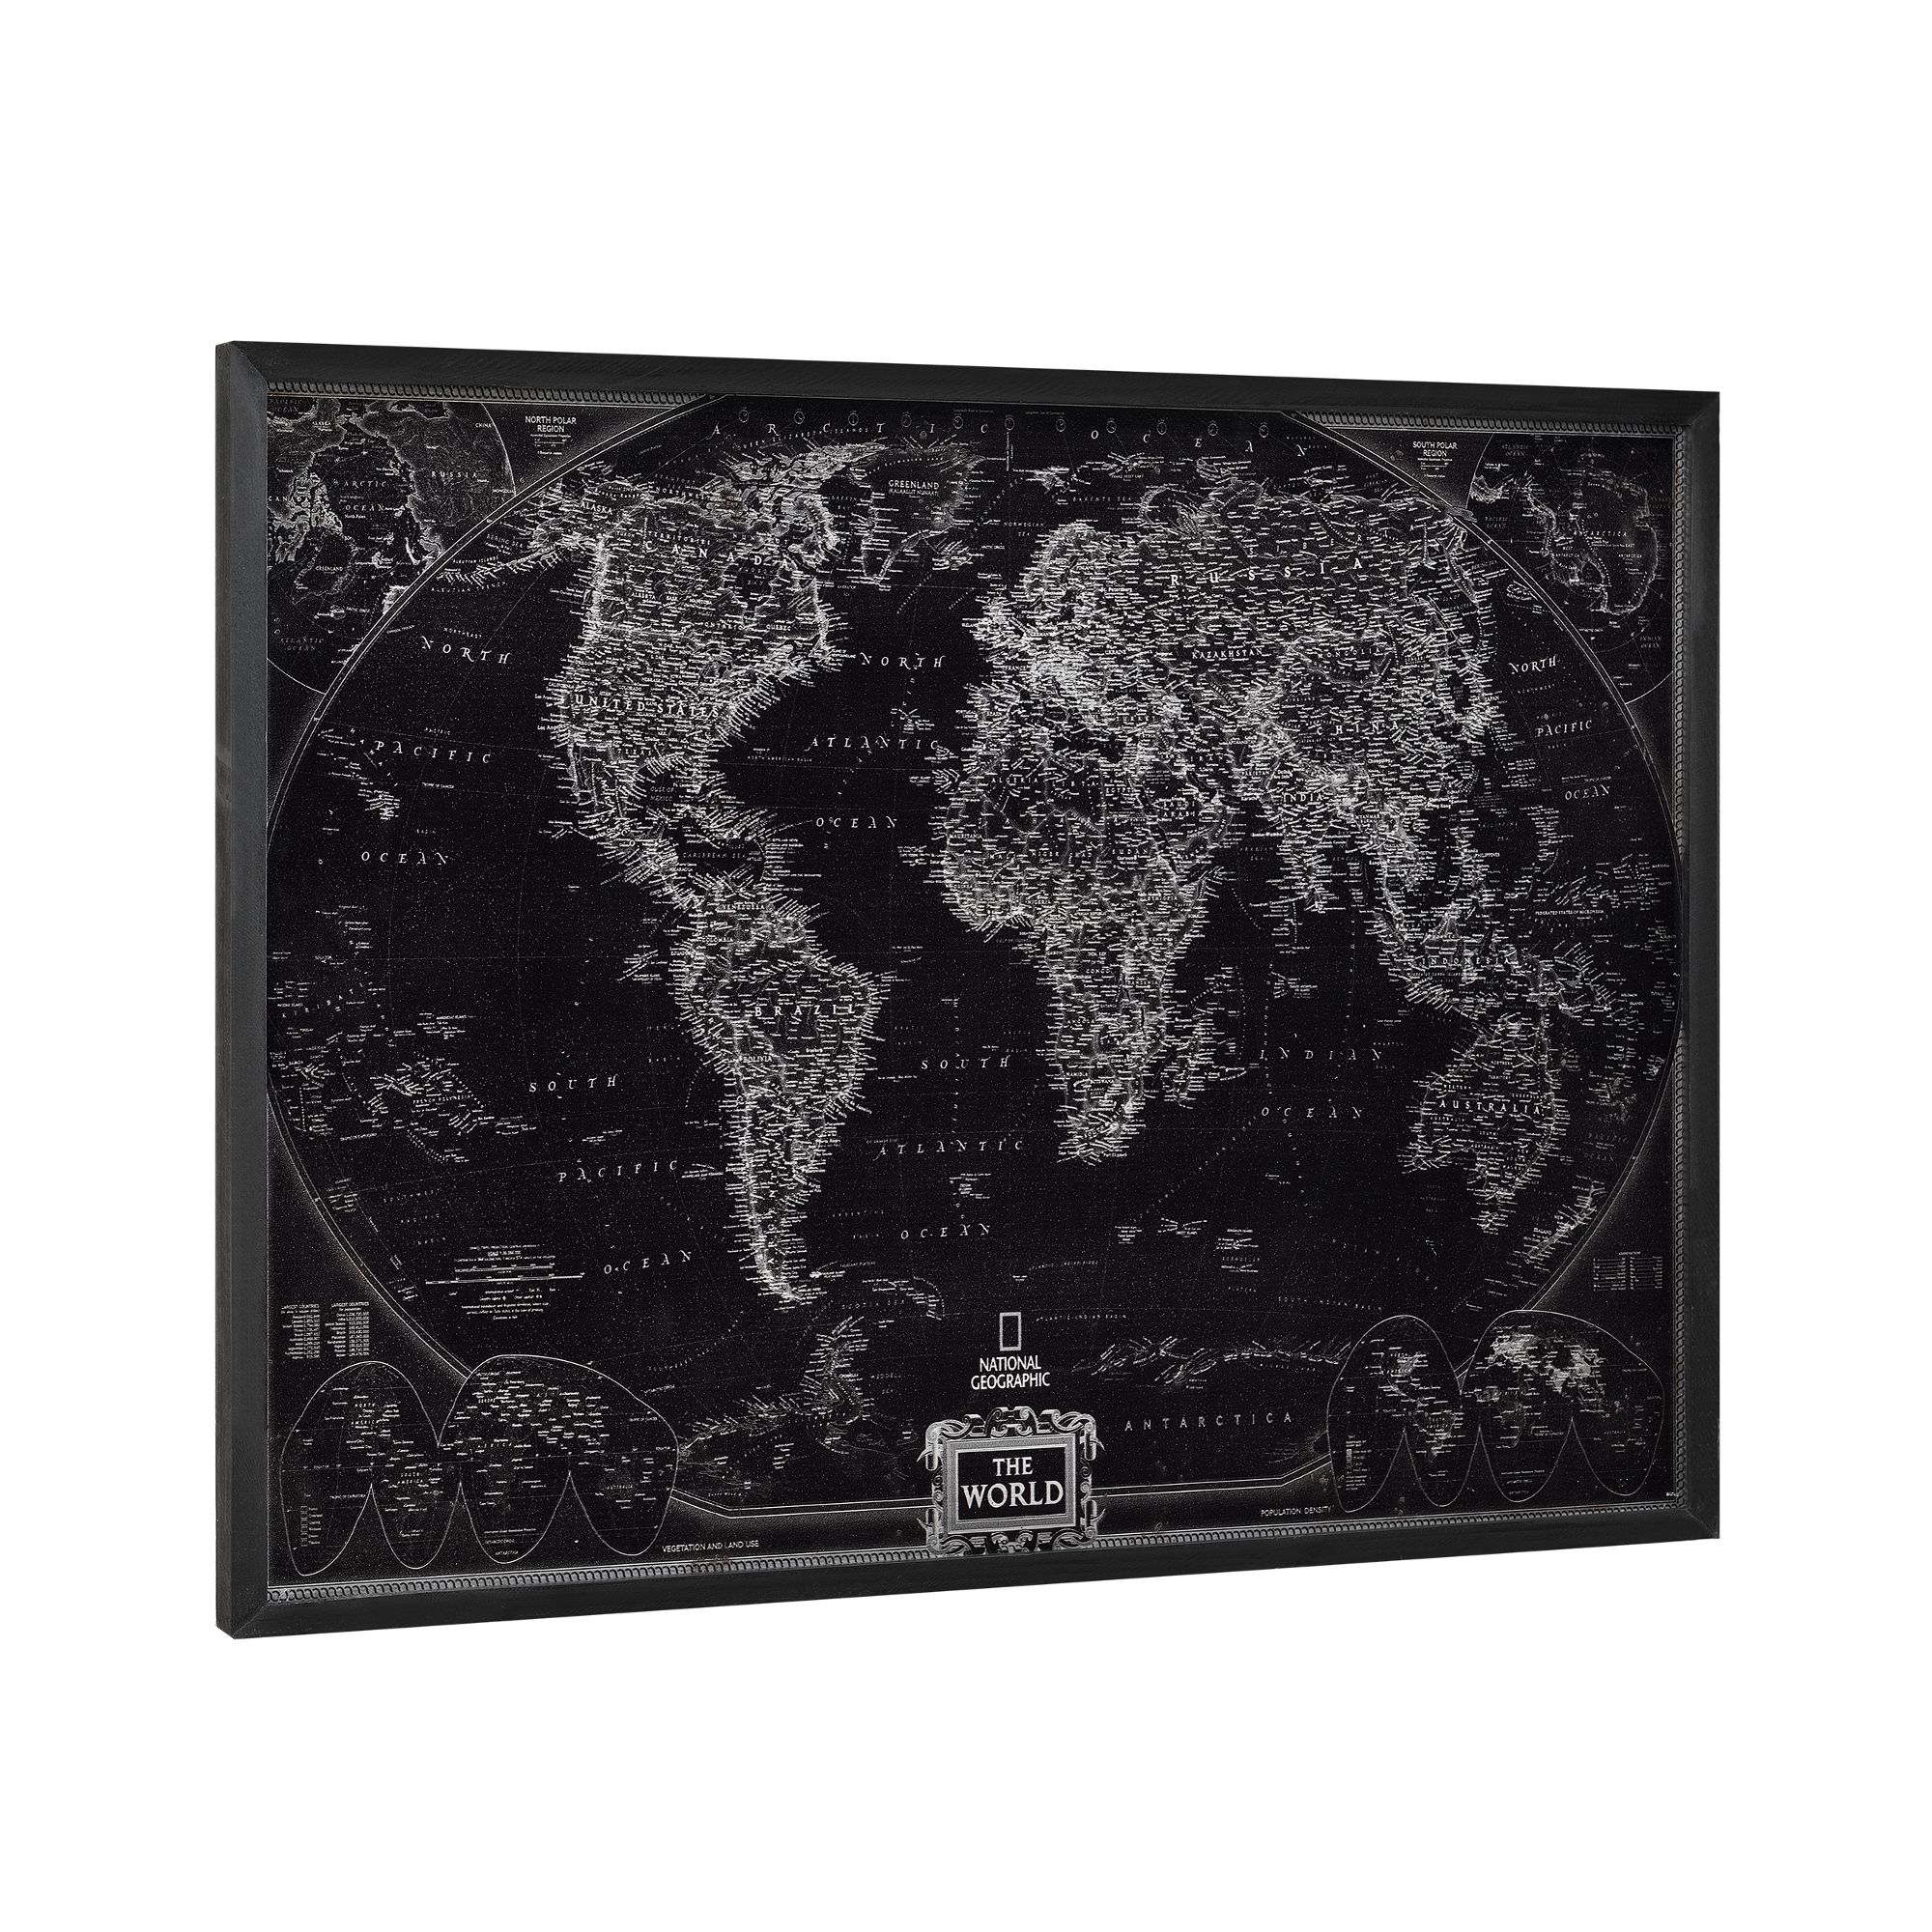 [art.work] Designový obraz na stěnu - hliníková deska - mapa světa - zarámovaný - 60x80x2,8 cm - H.T. Trade Service GmbH & Co. KG